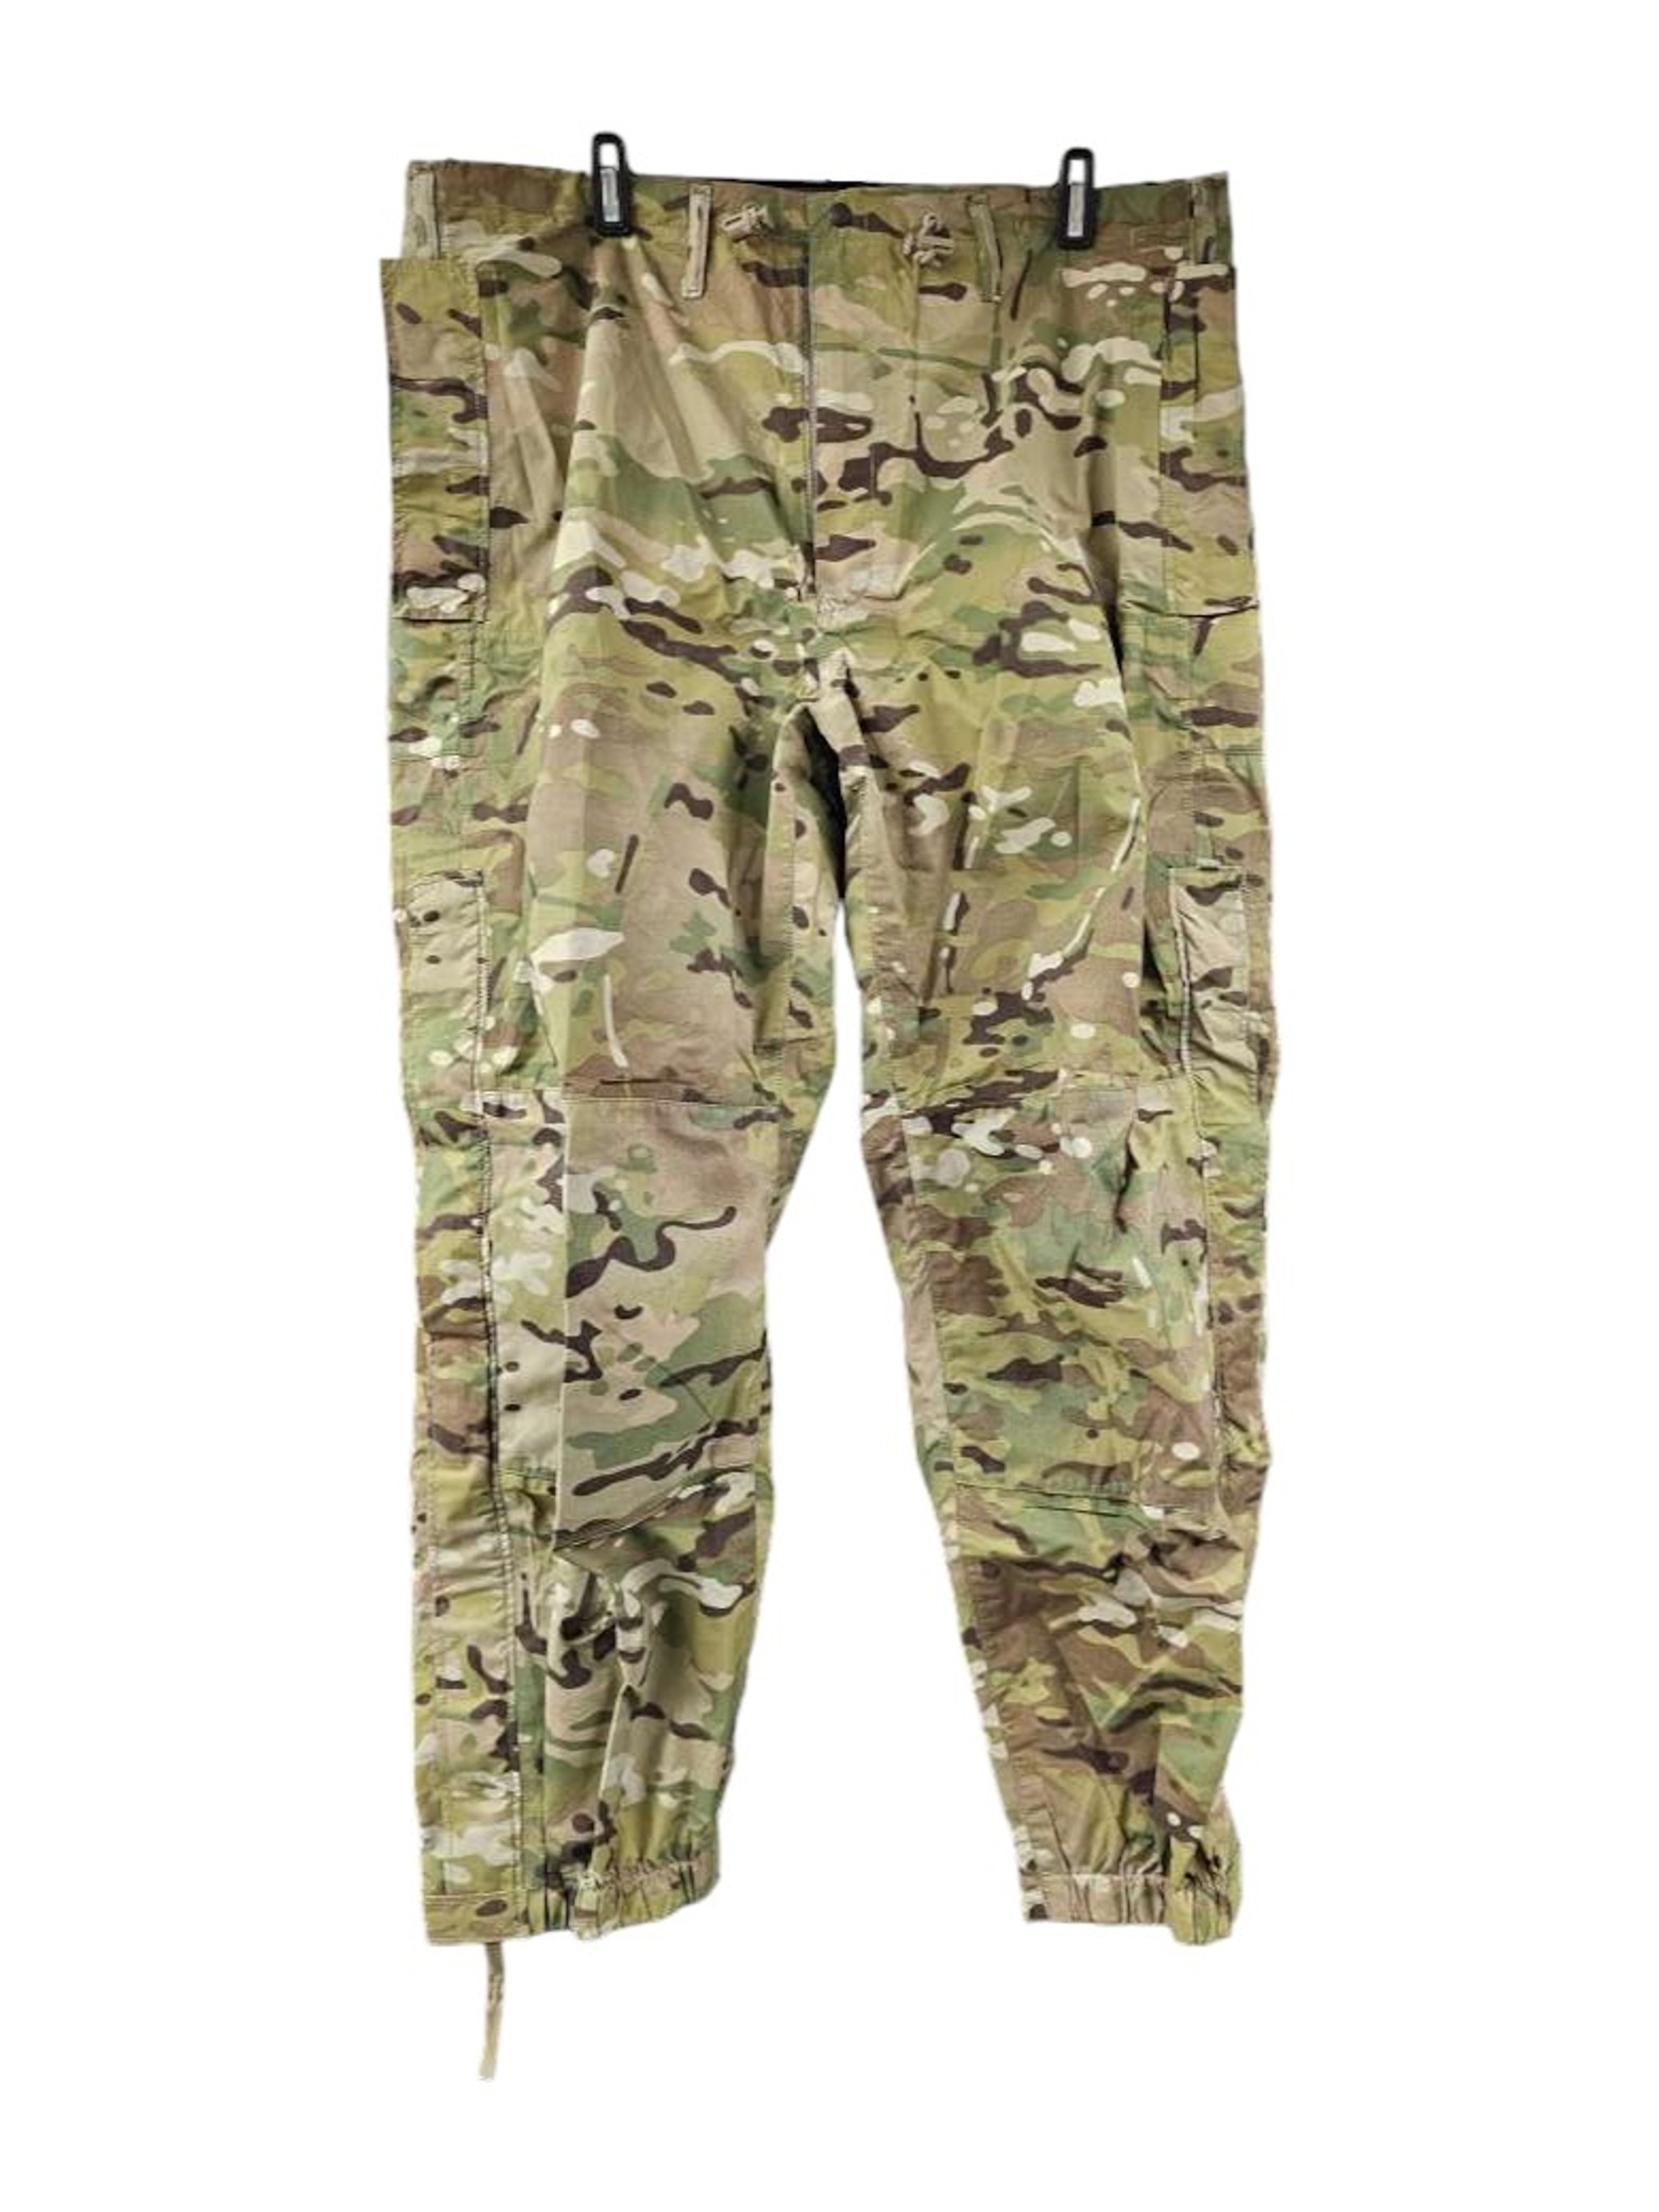 U.S. Armed Forces ECWS Level 6 Gore-tex Pants